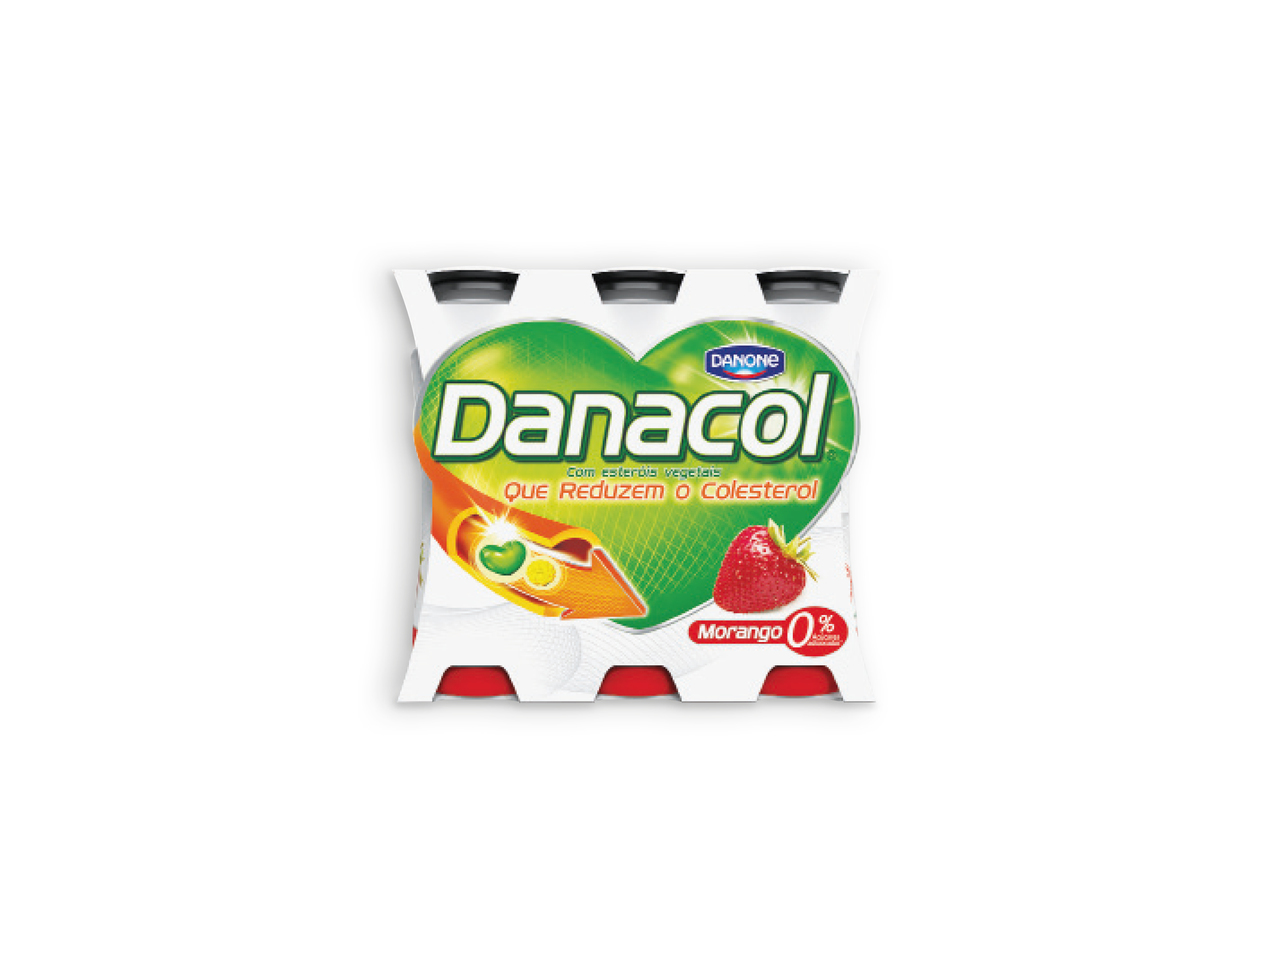 DANONE(R) Iogurte Líquido Danacol